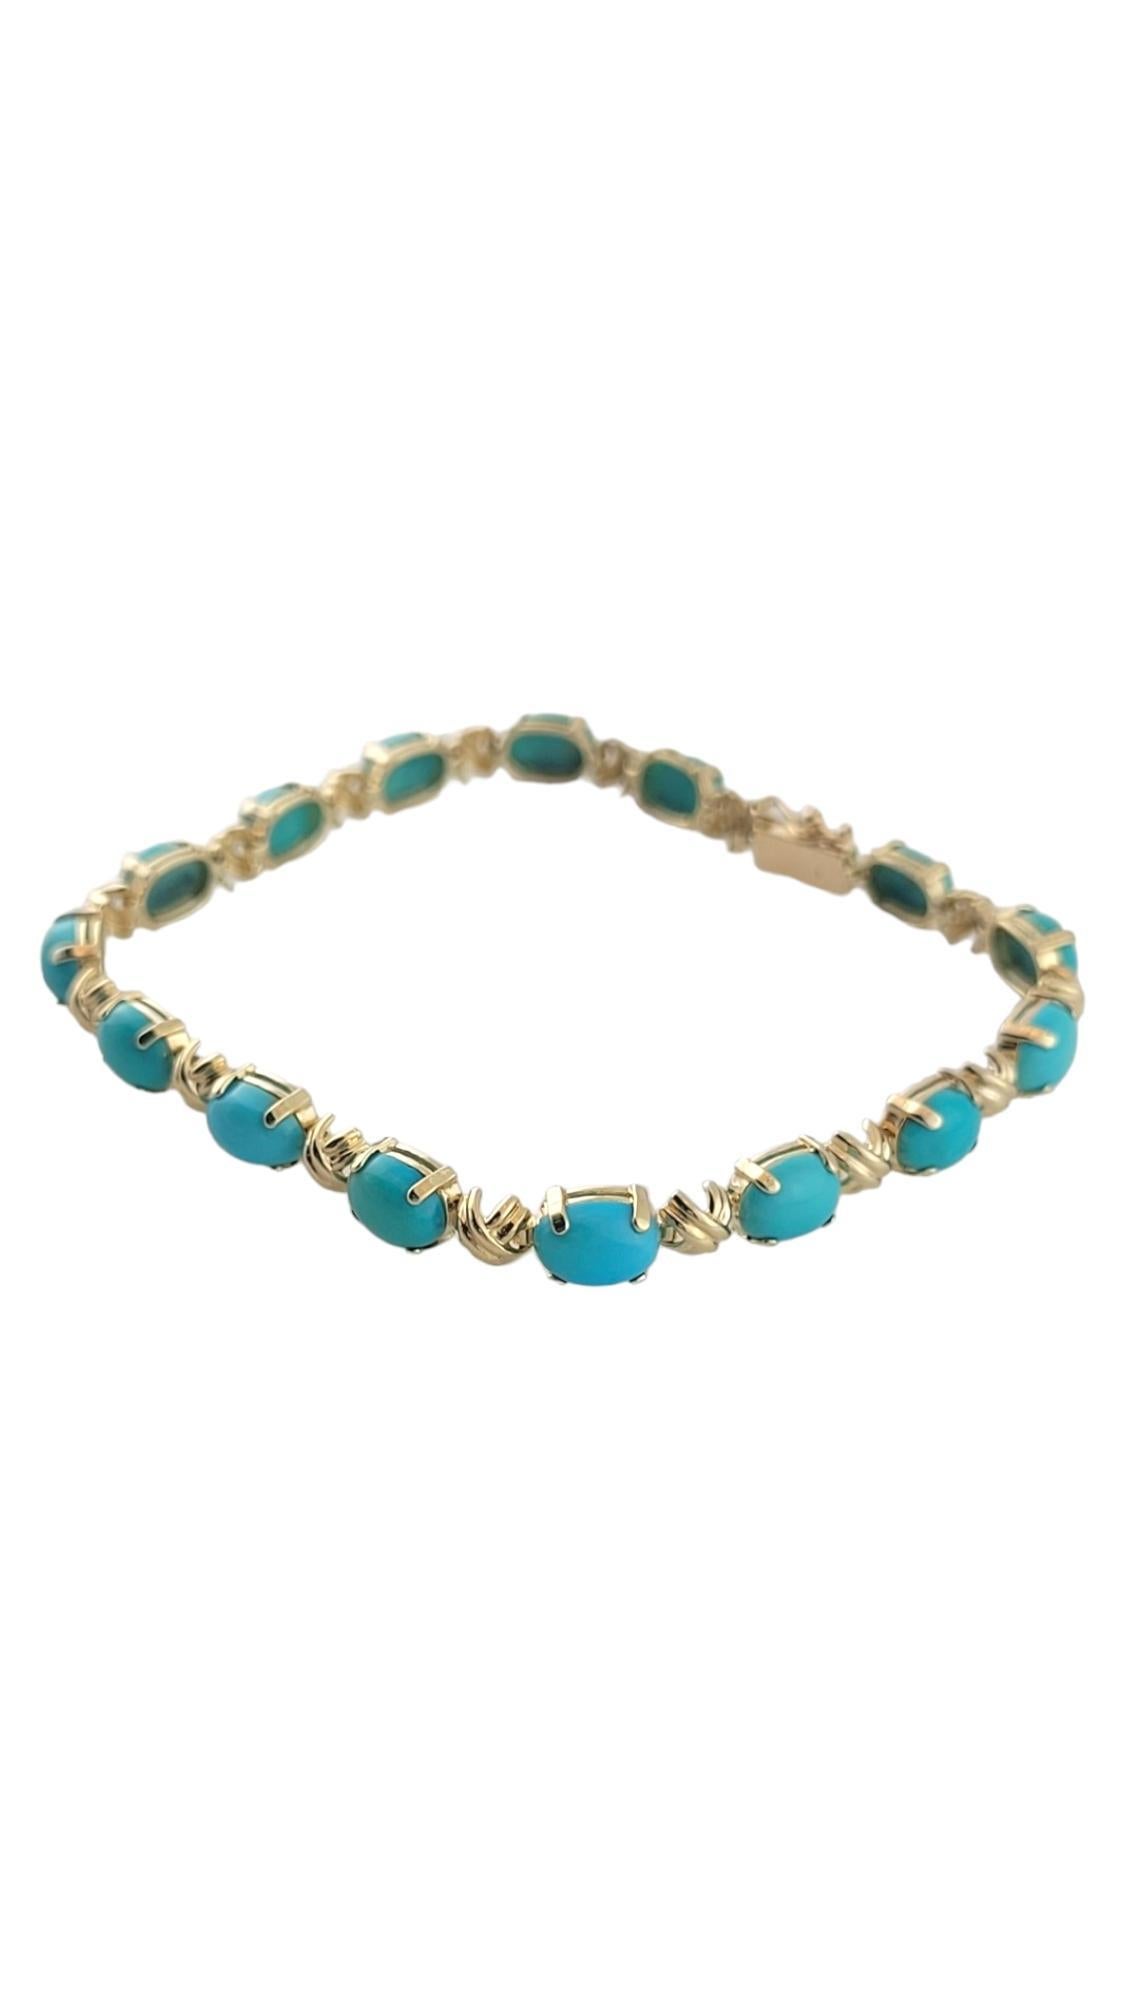 Taille ronde Bracelet turquoise en or jaune 14 carats n° 16369